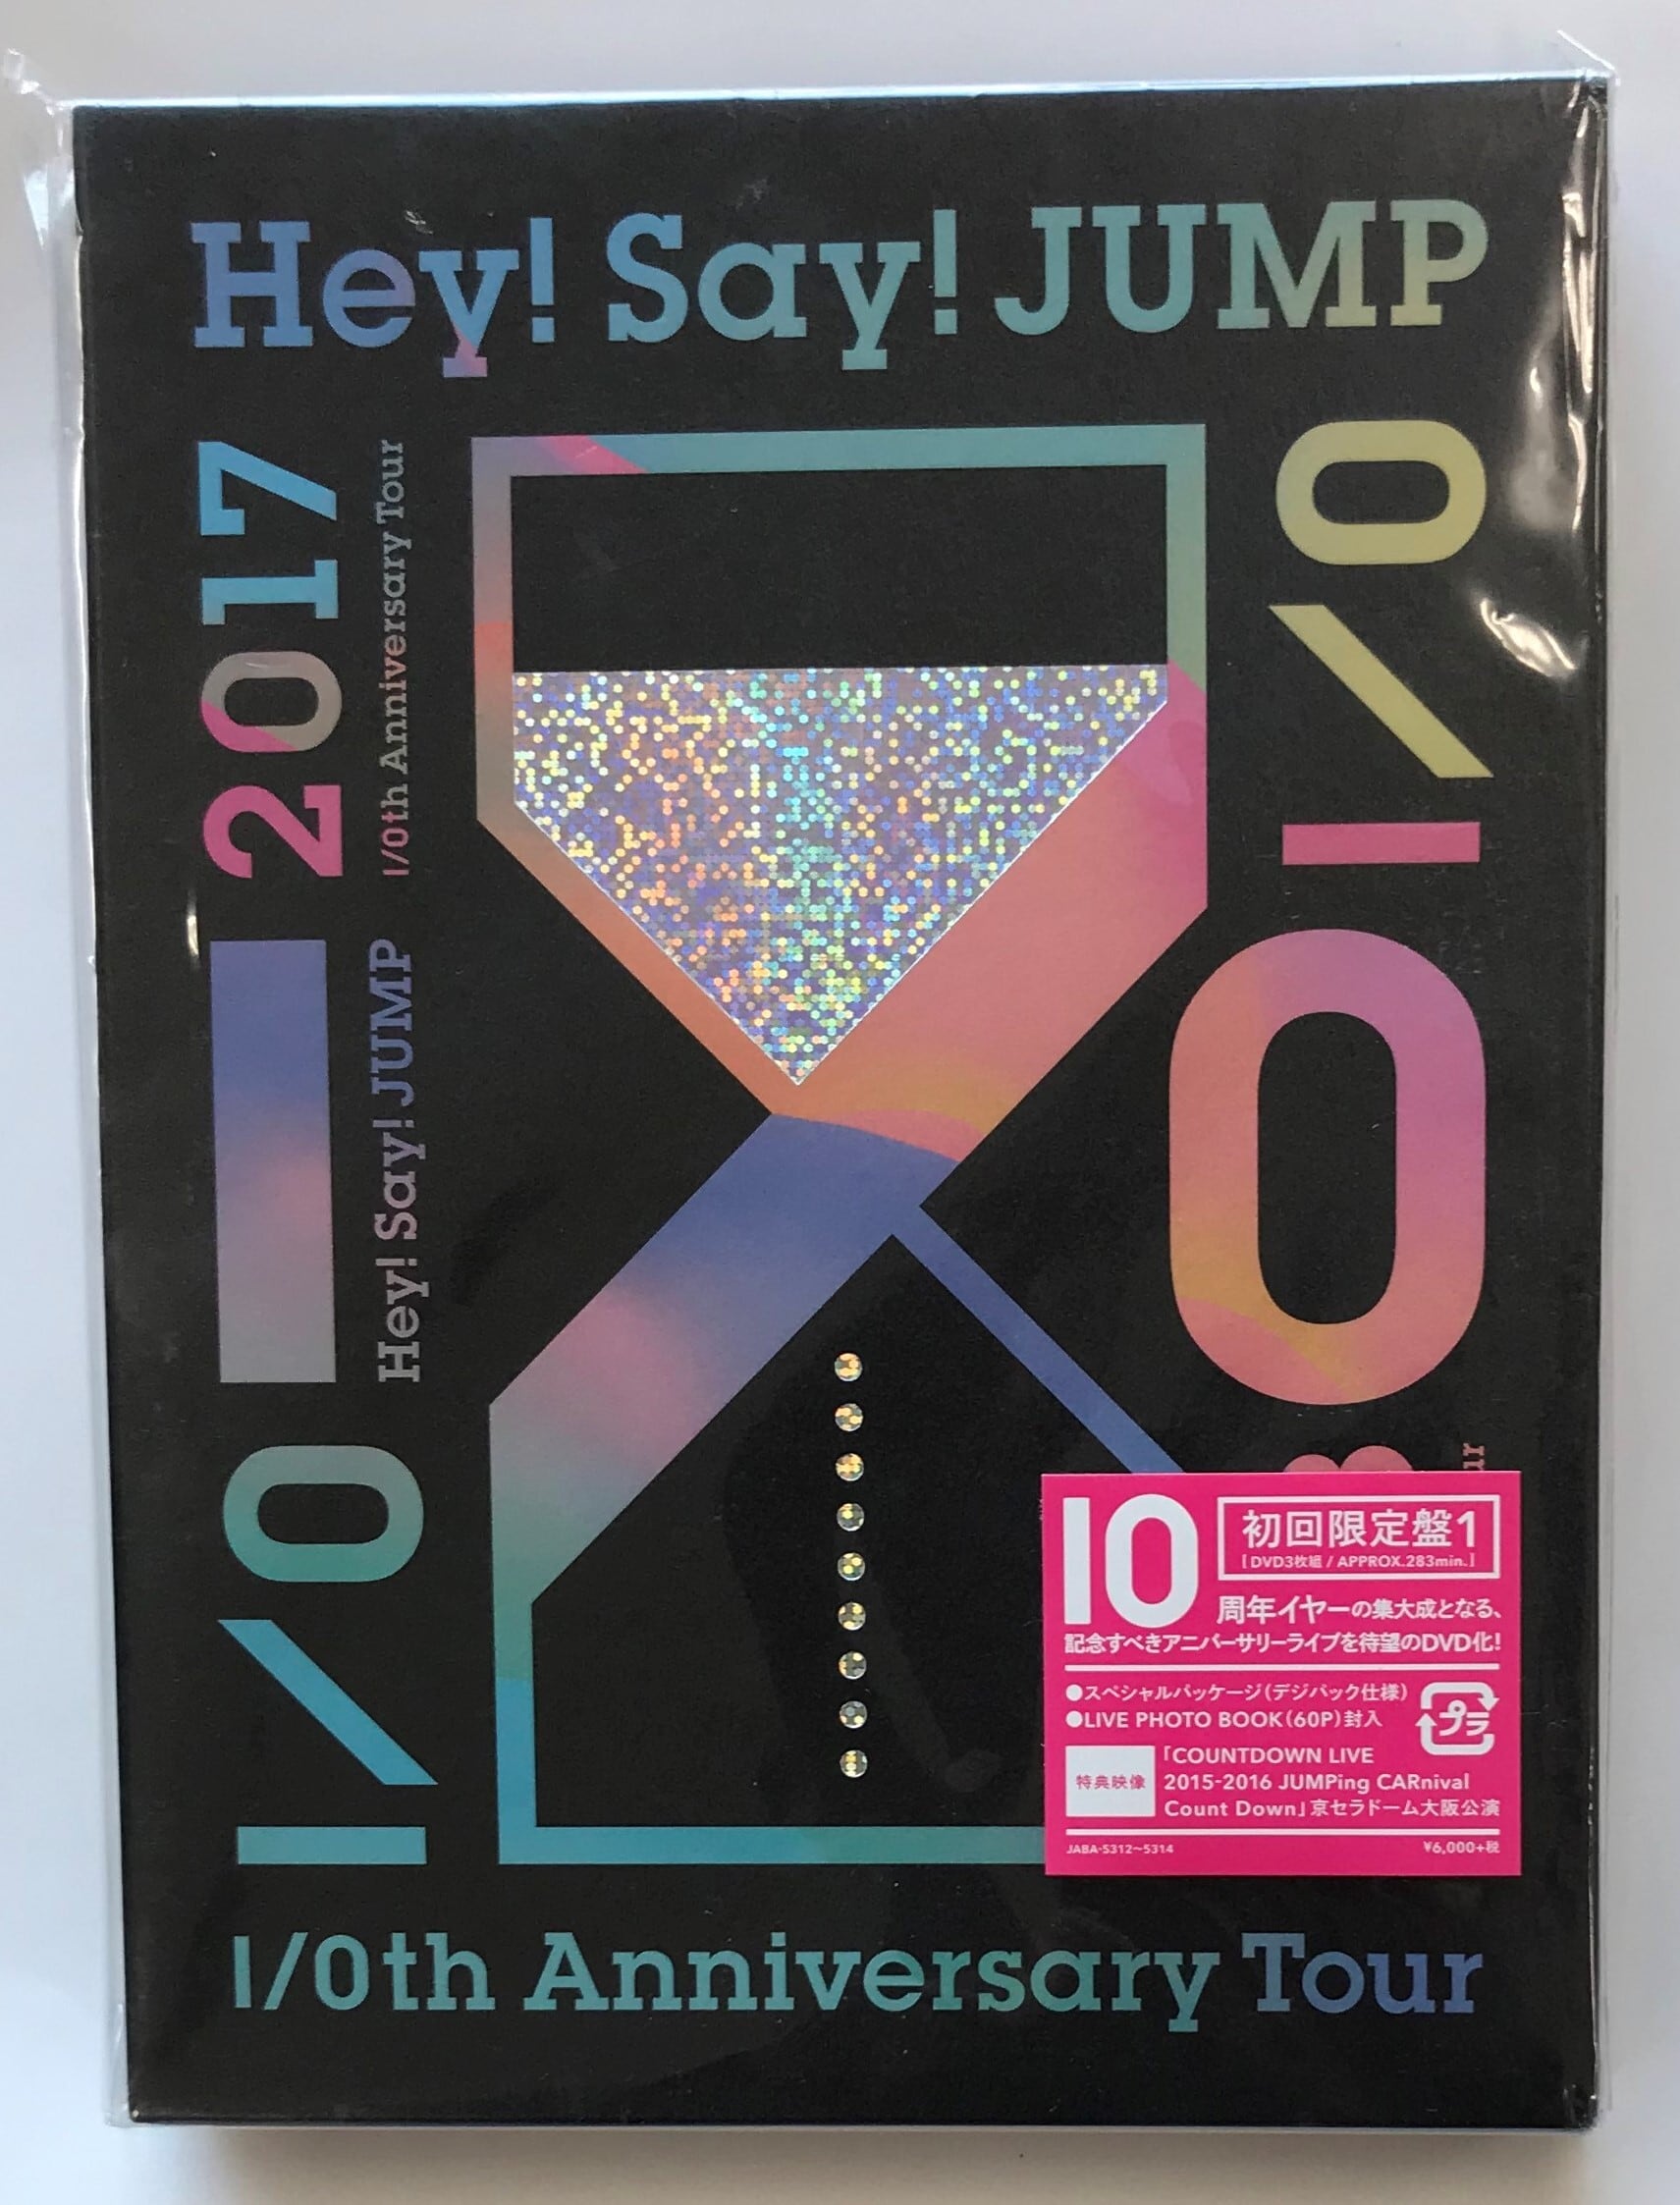 Hey!Say!JUMP Hey!Say!Jump-ing Tour'08-'… - ブルーレイ